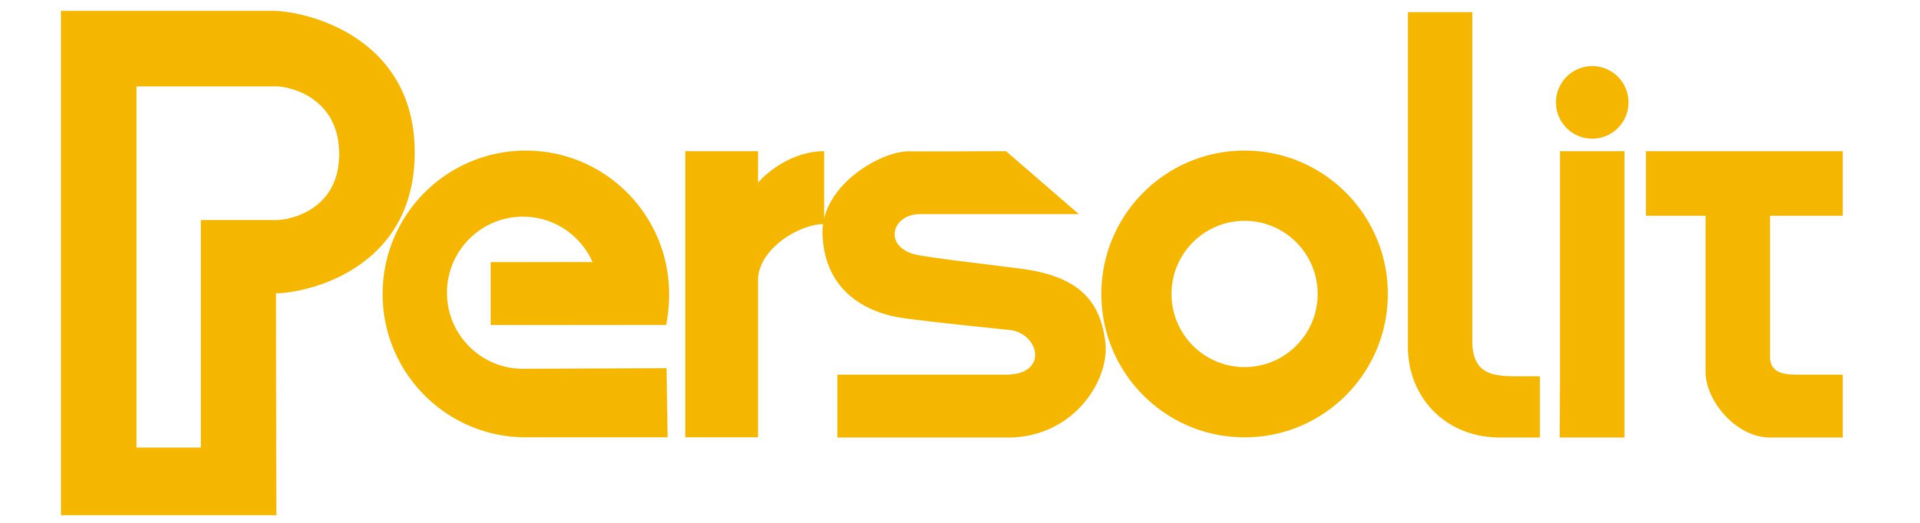 Persolit - logo